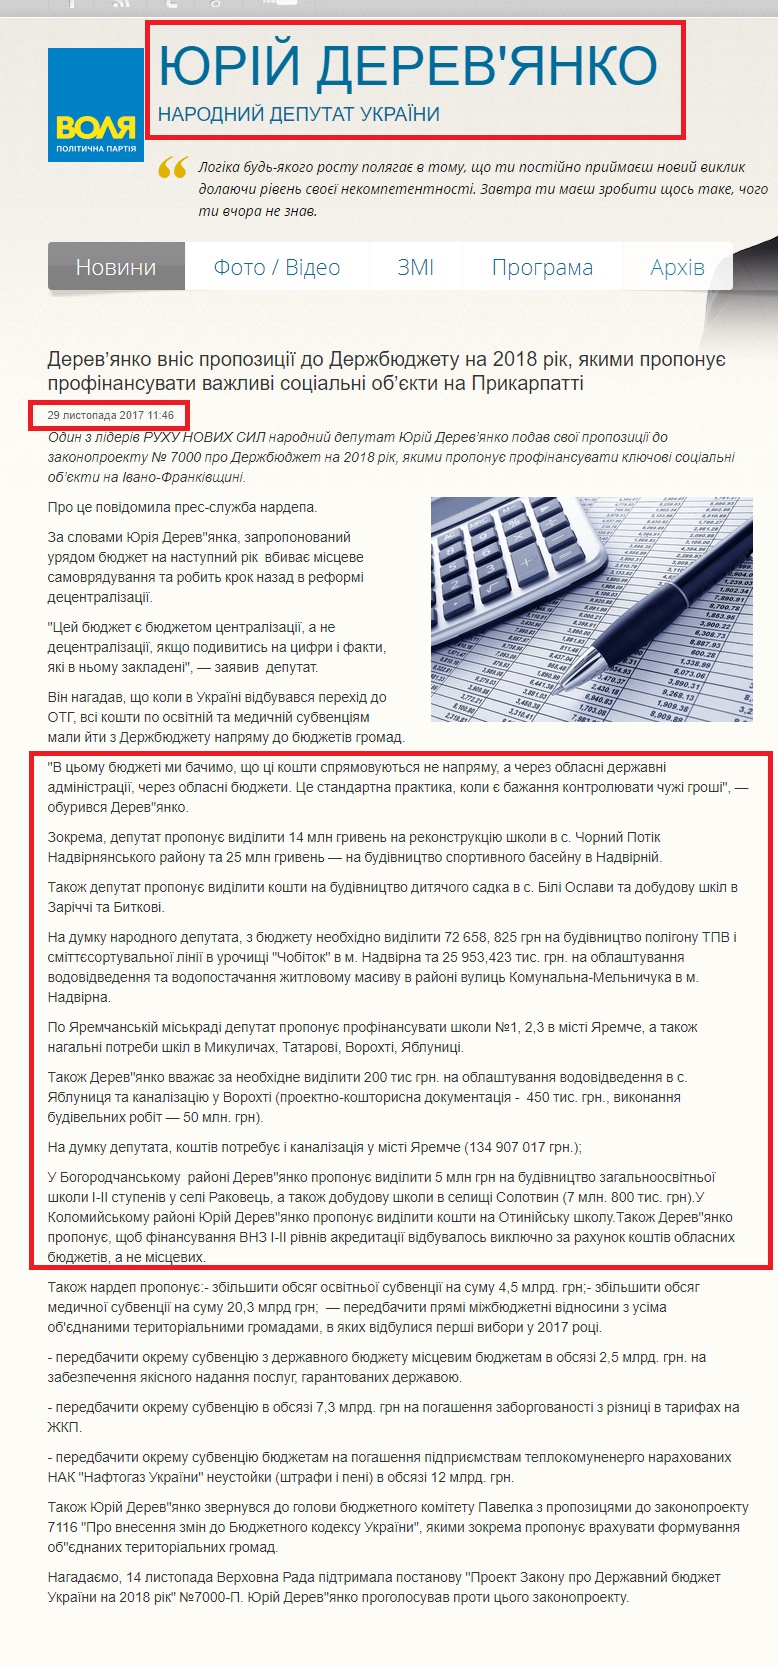 http://derevyanko.org/ua/news/id/derevjanko-vnis-propoziciji-do-derzhbjudzhetu-na-2018-rik-jakimi-proponuje-profinansuvati-vazhlivi-socialni-objekti-na-prikarpatti-1754/